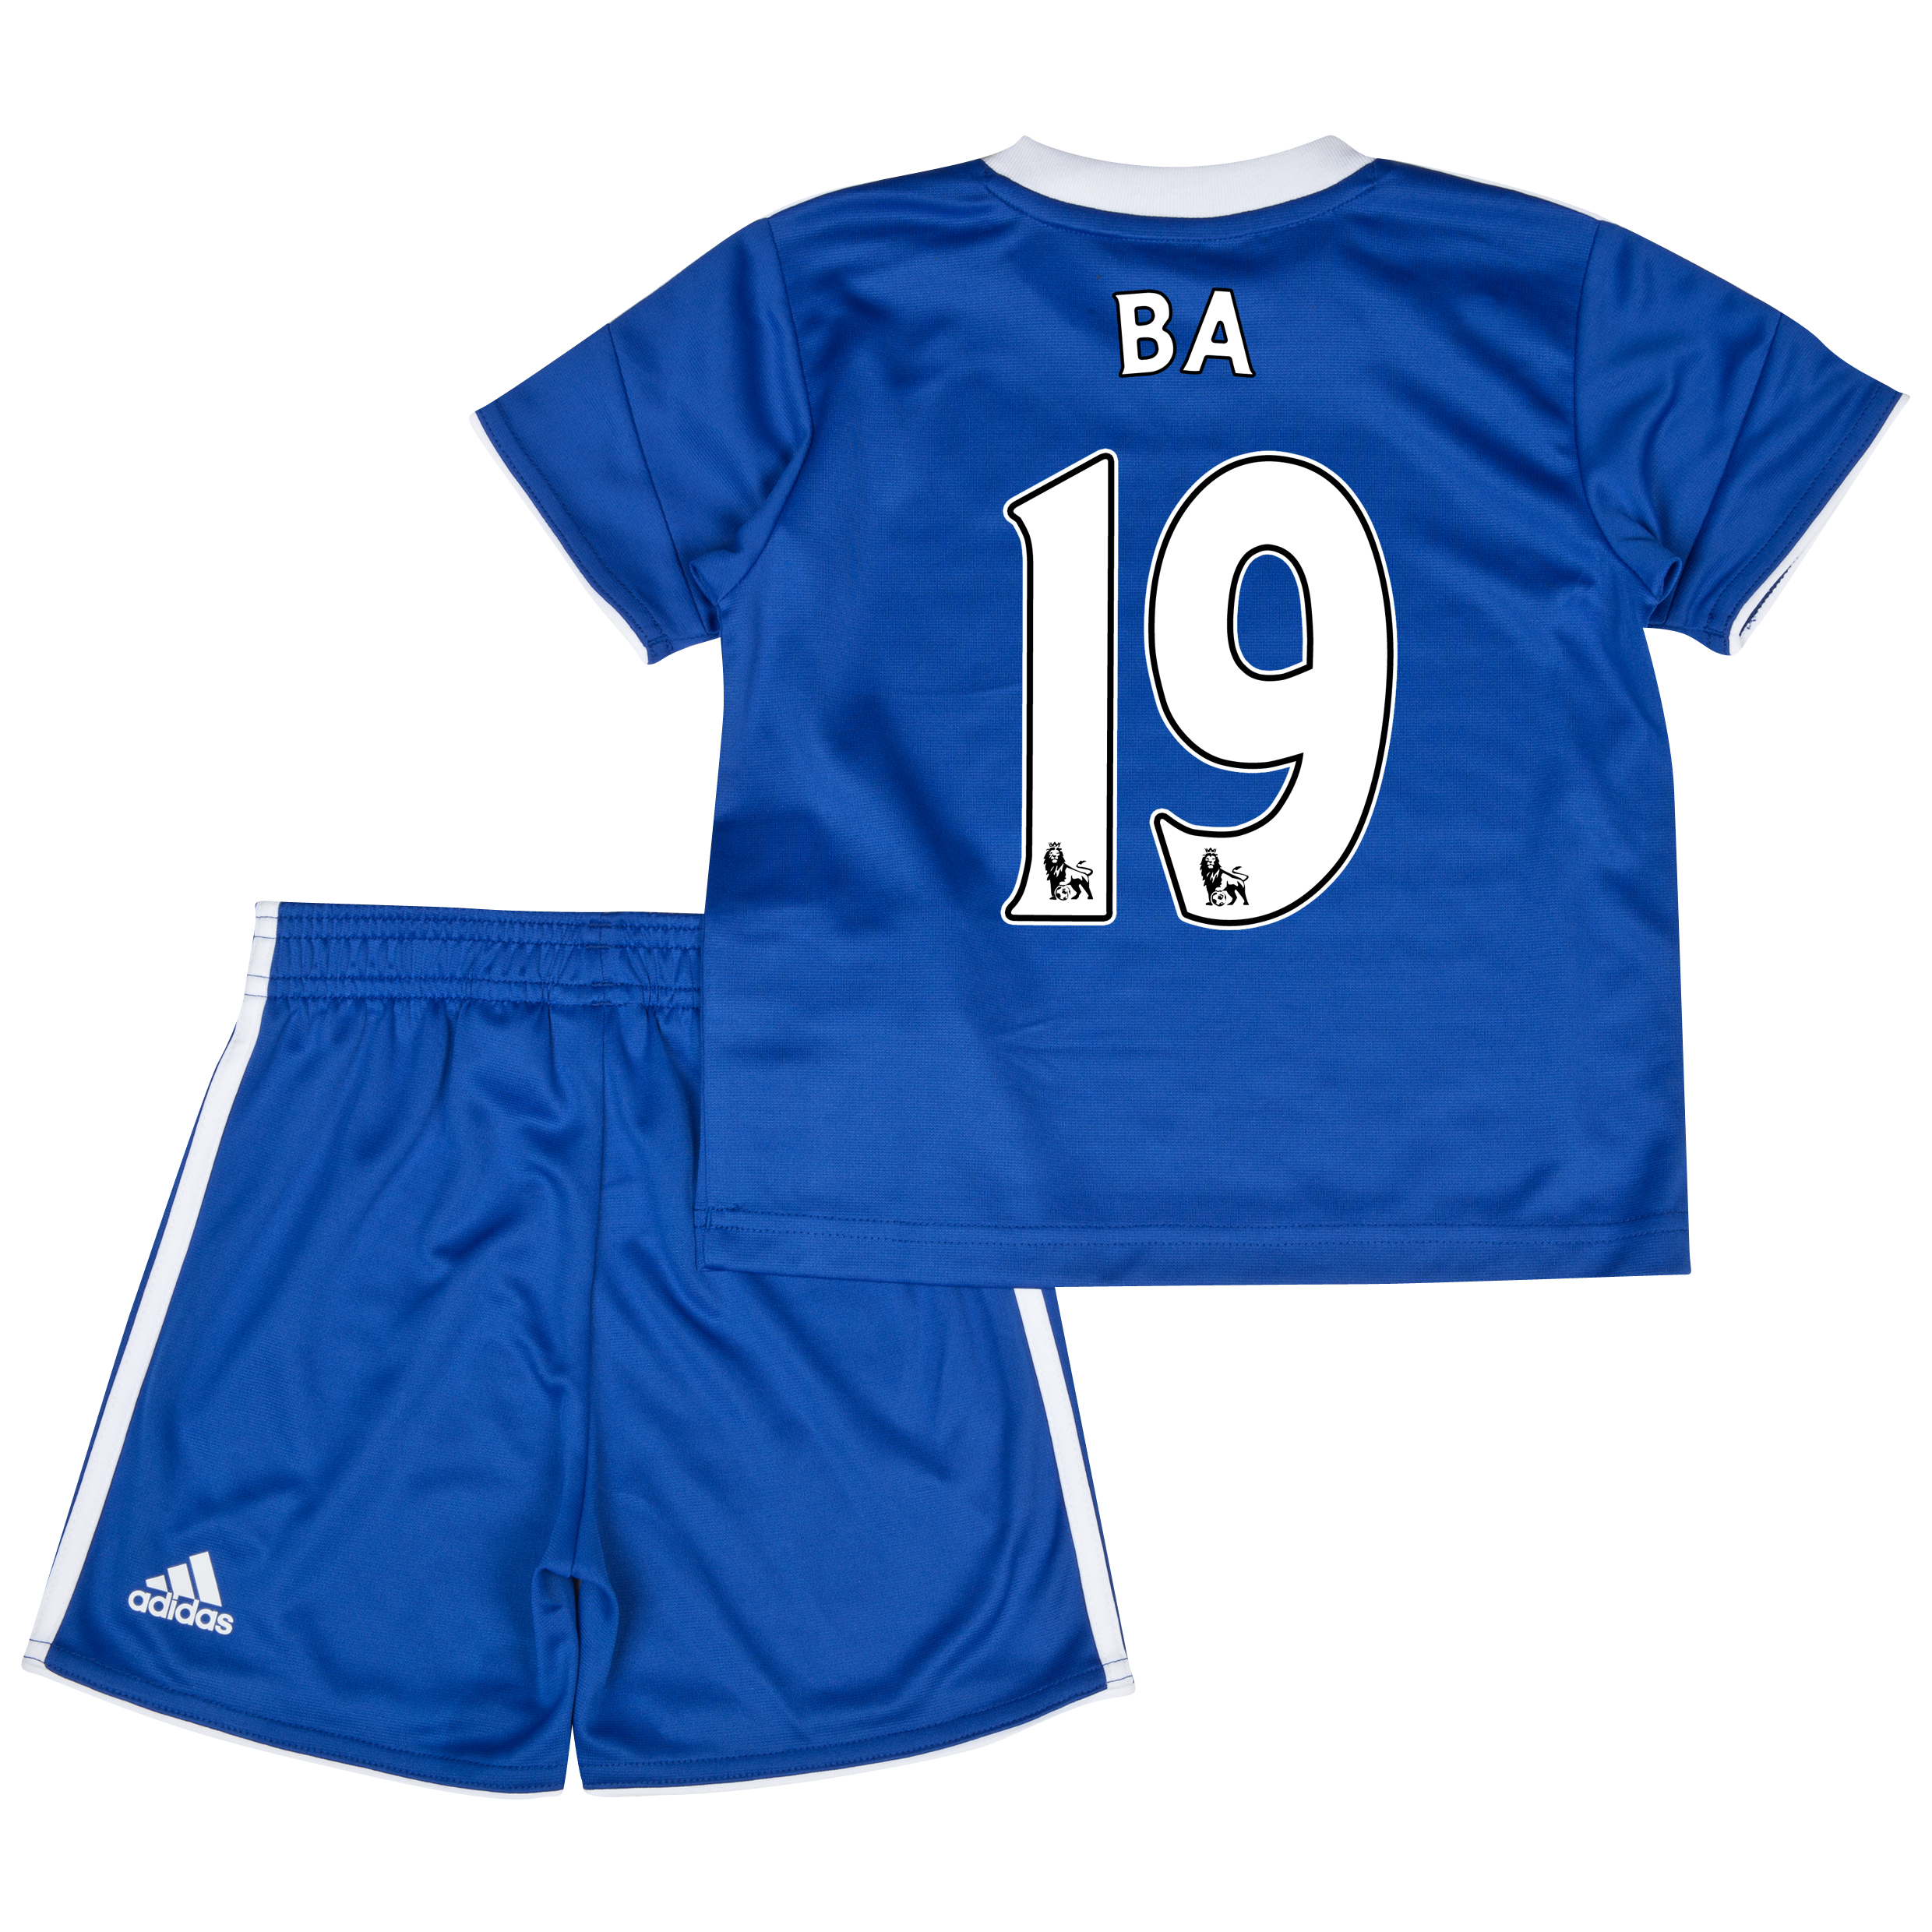 Chelsea Home Mini Kit 2013/14 with Ba 19 printing